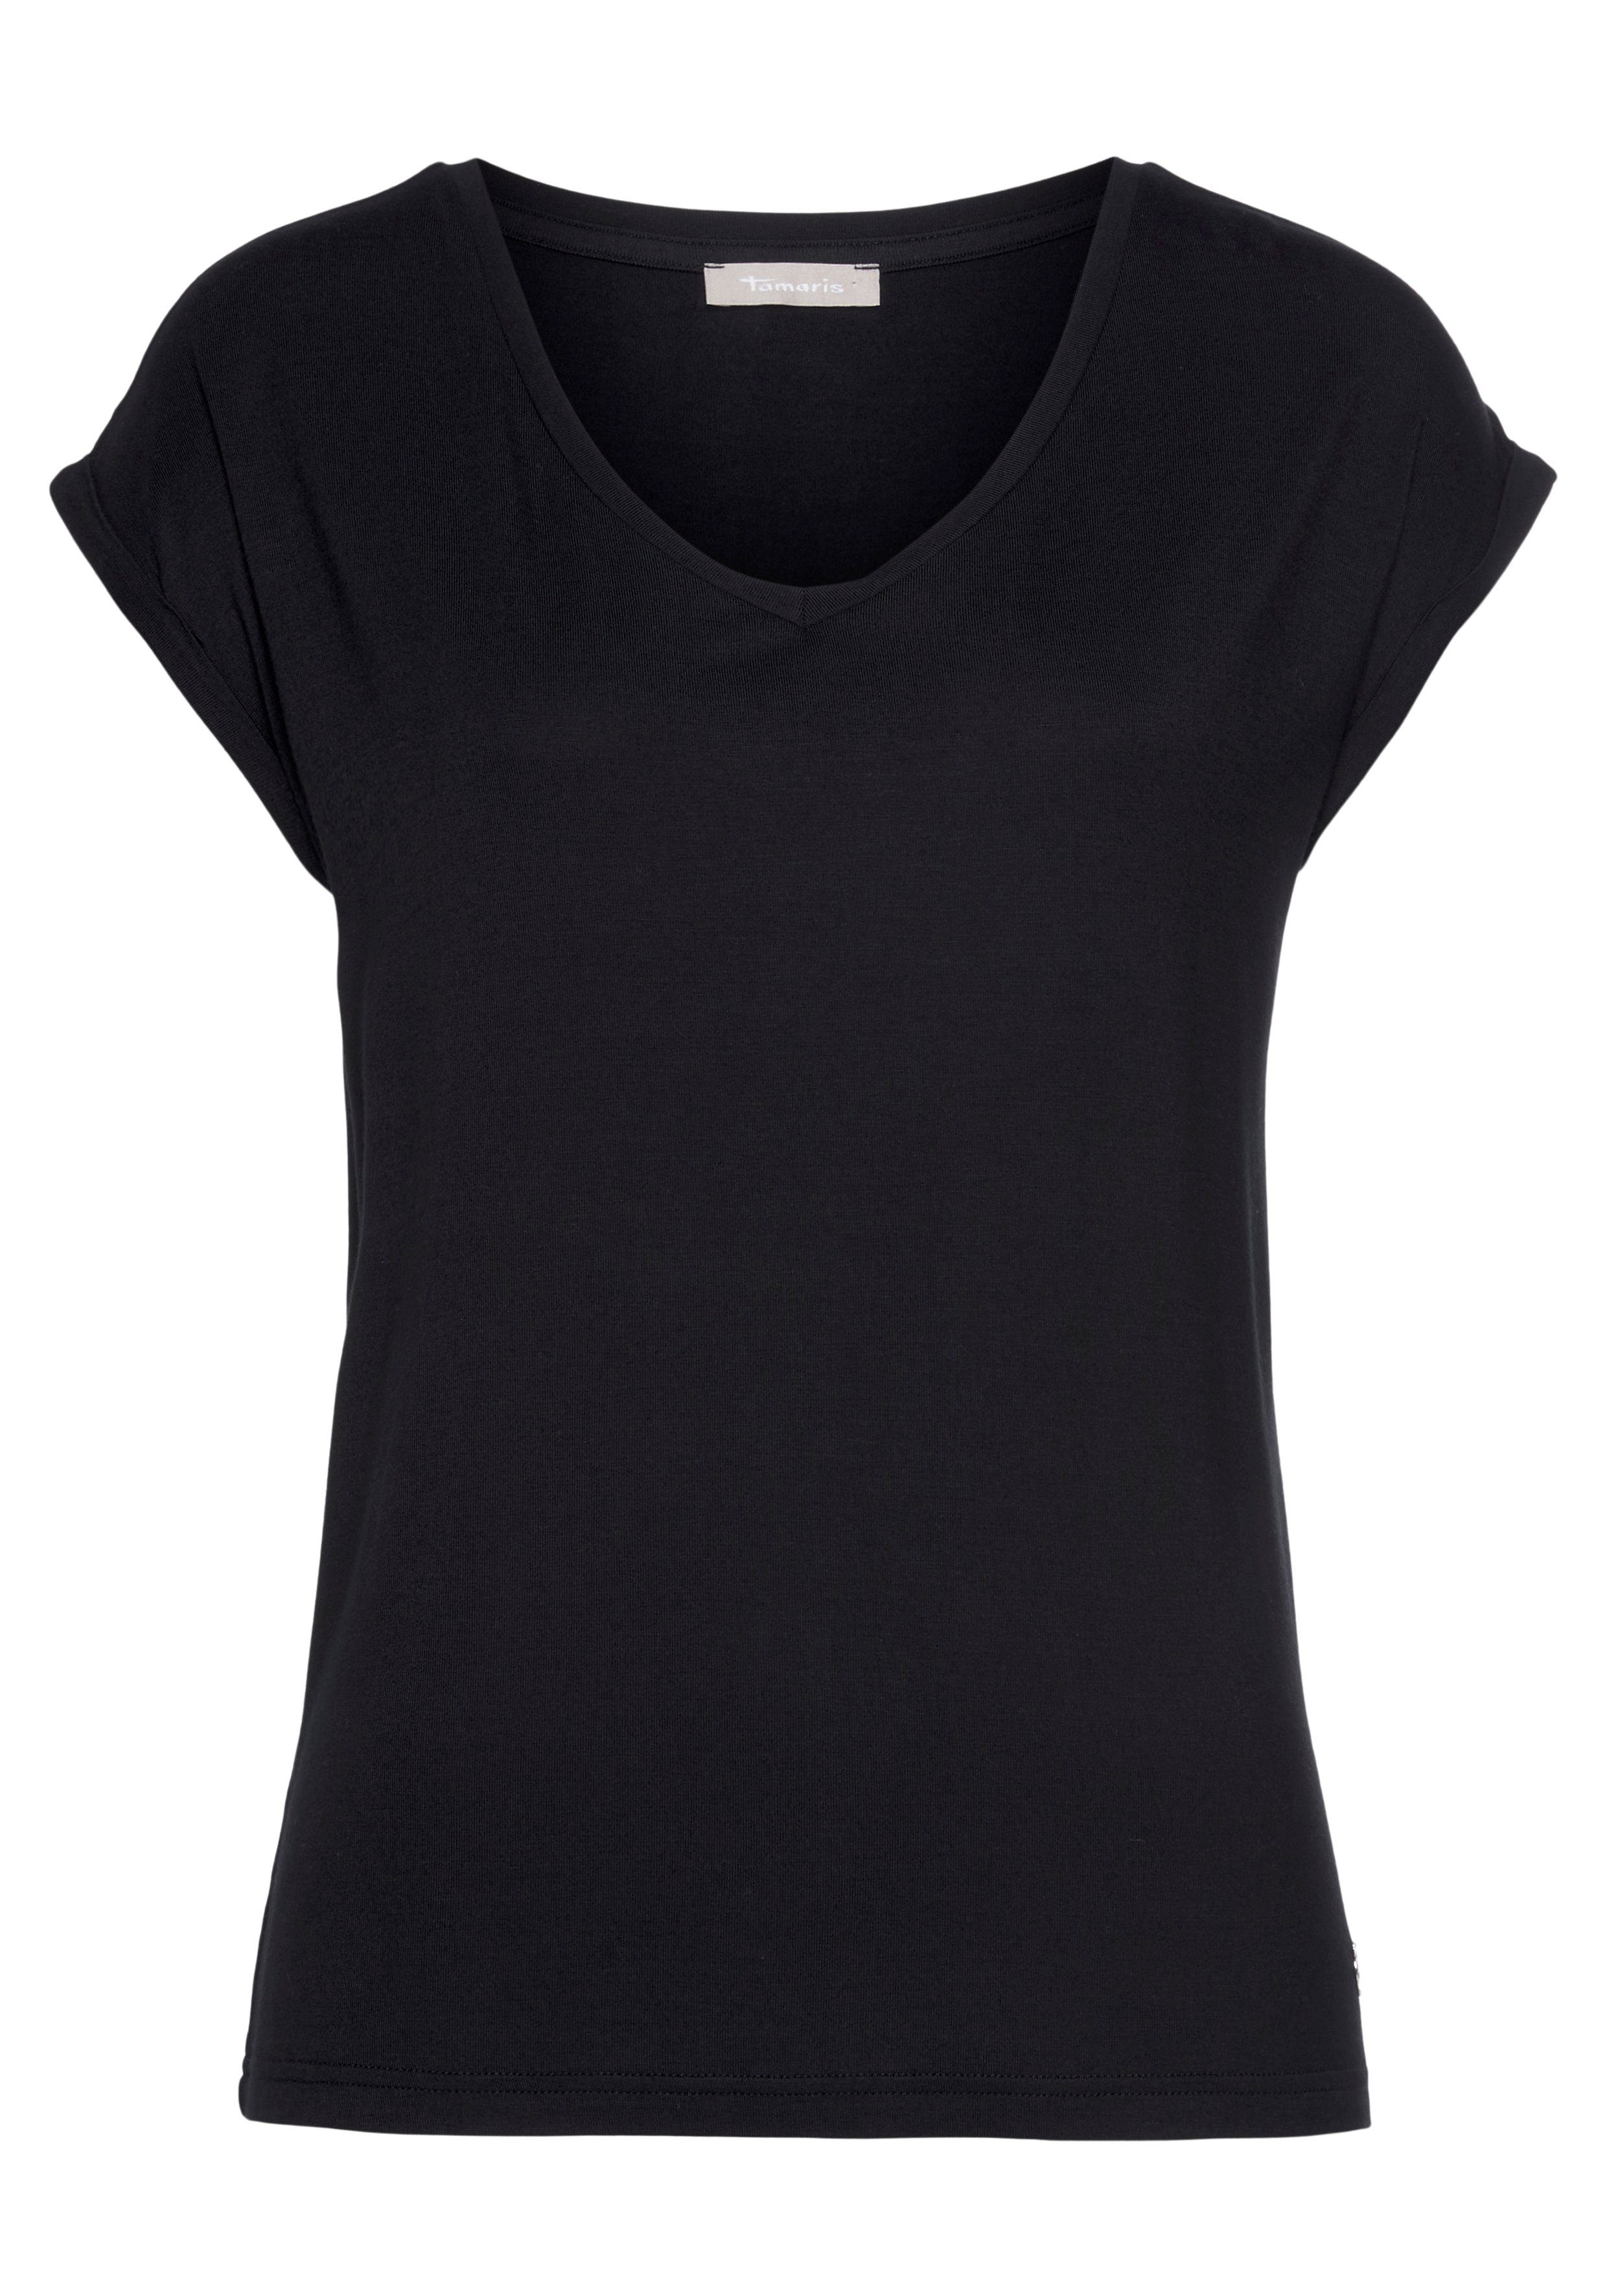 Tamaris V-Shirt mit lockerer eco Passform schwarz